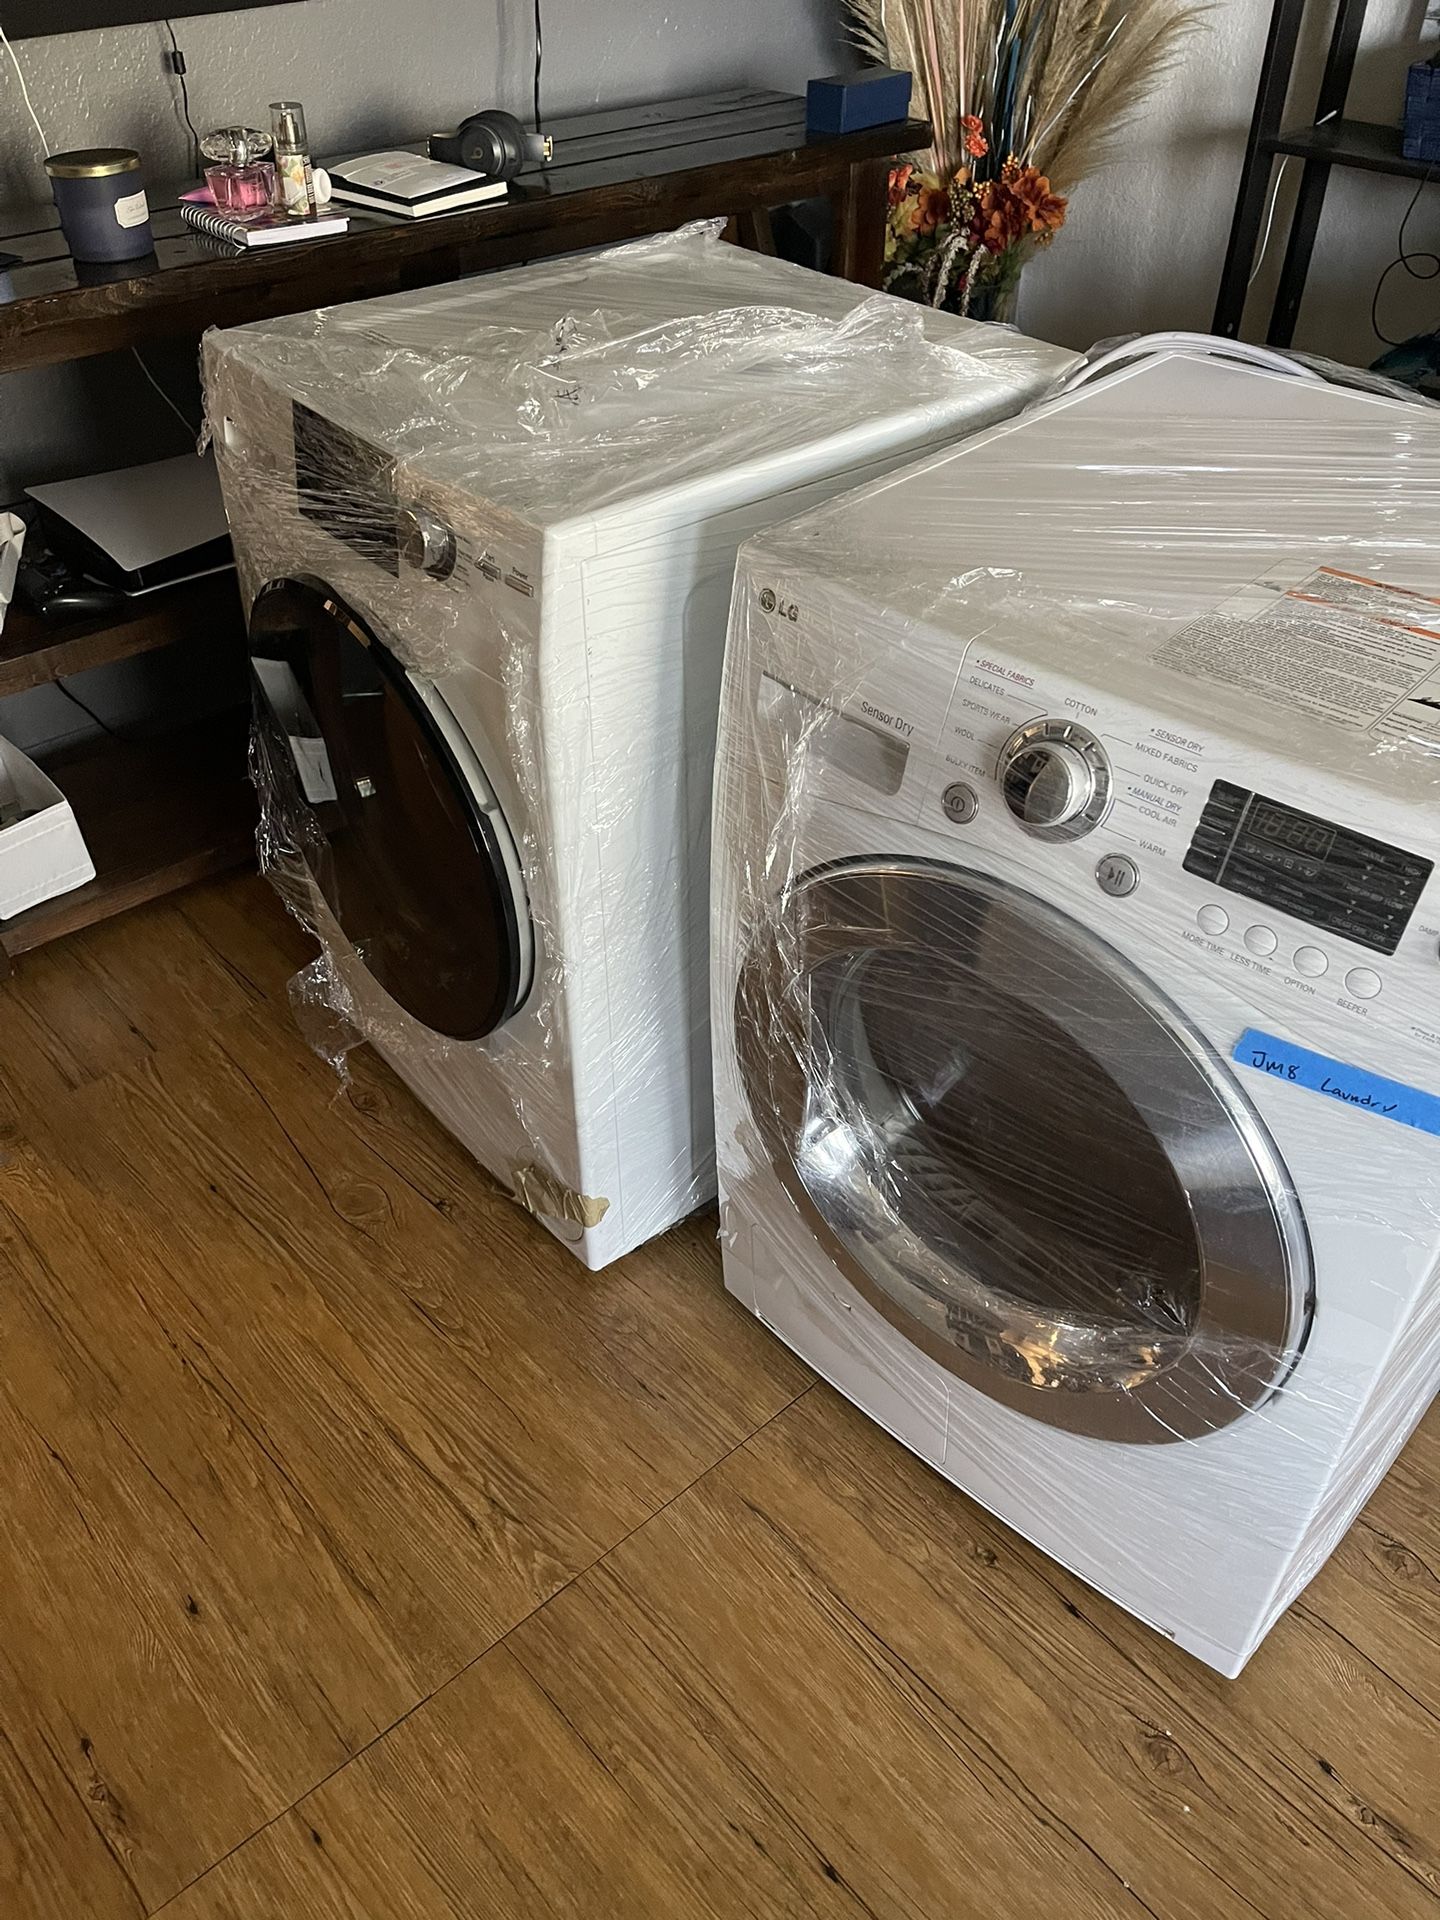 LG Dryer/  GE Washing Machine